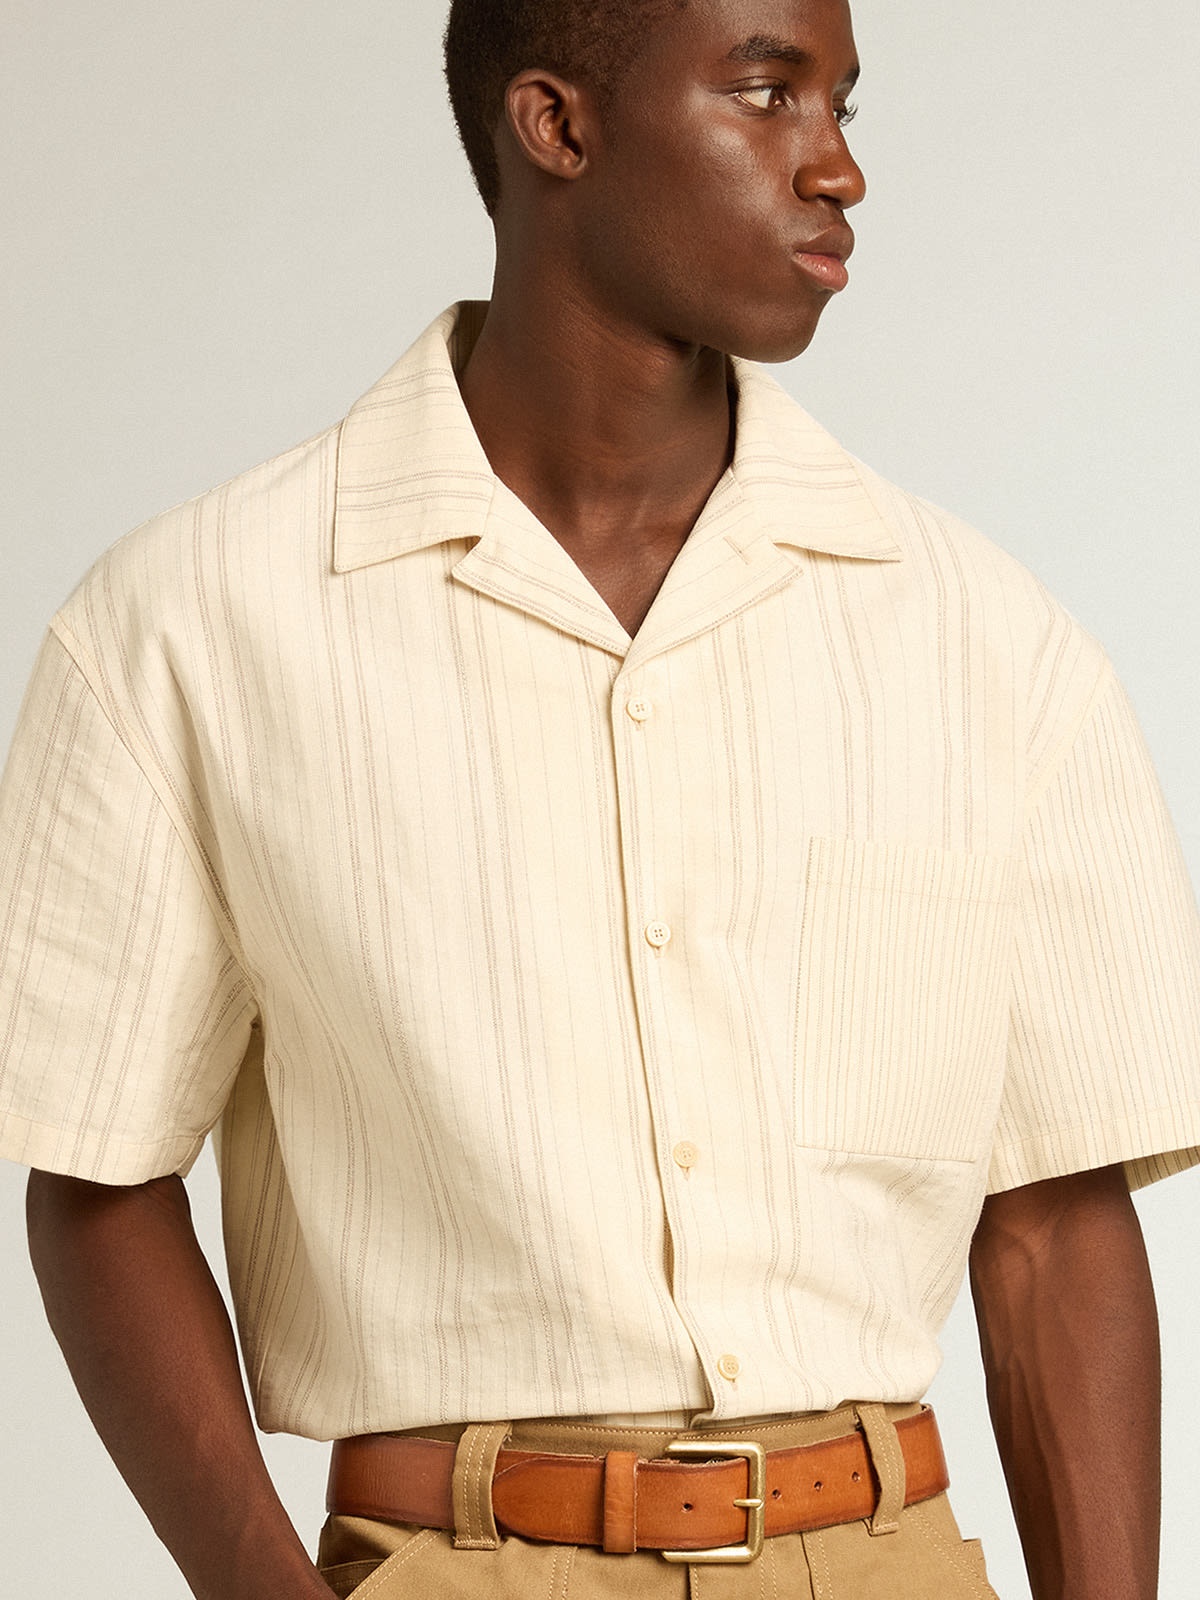 Men's short-sleeved shirt in ecru-colored cotton - 2